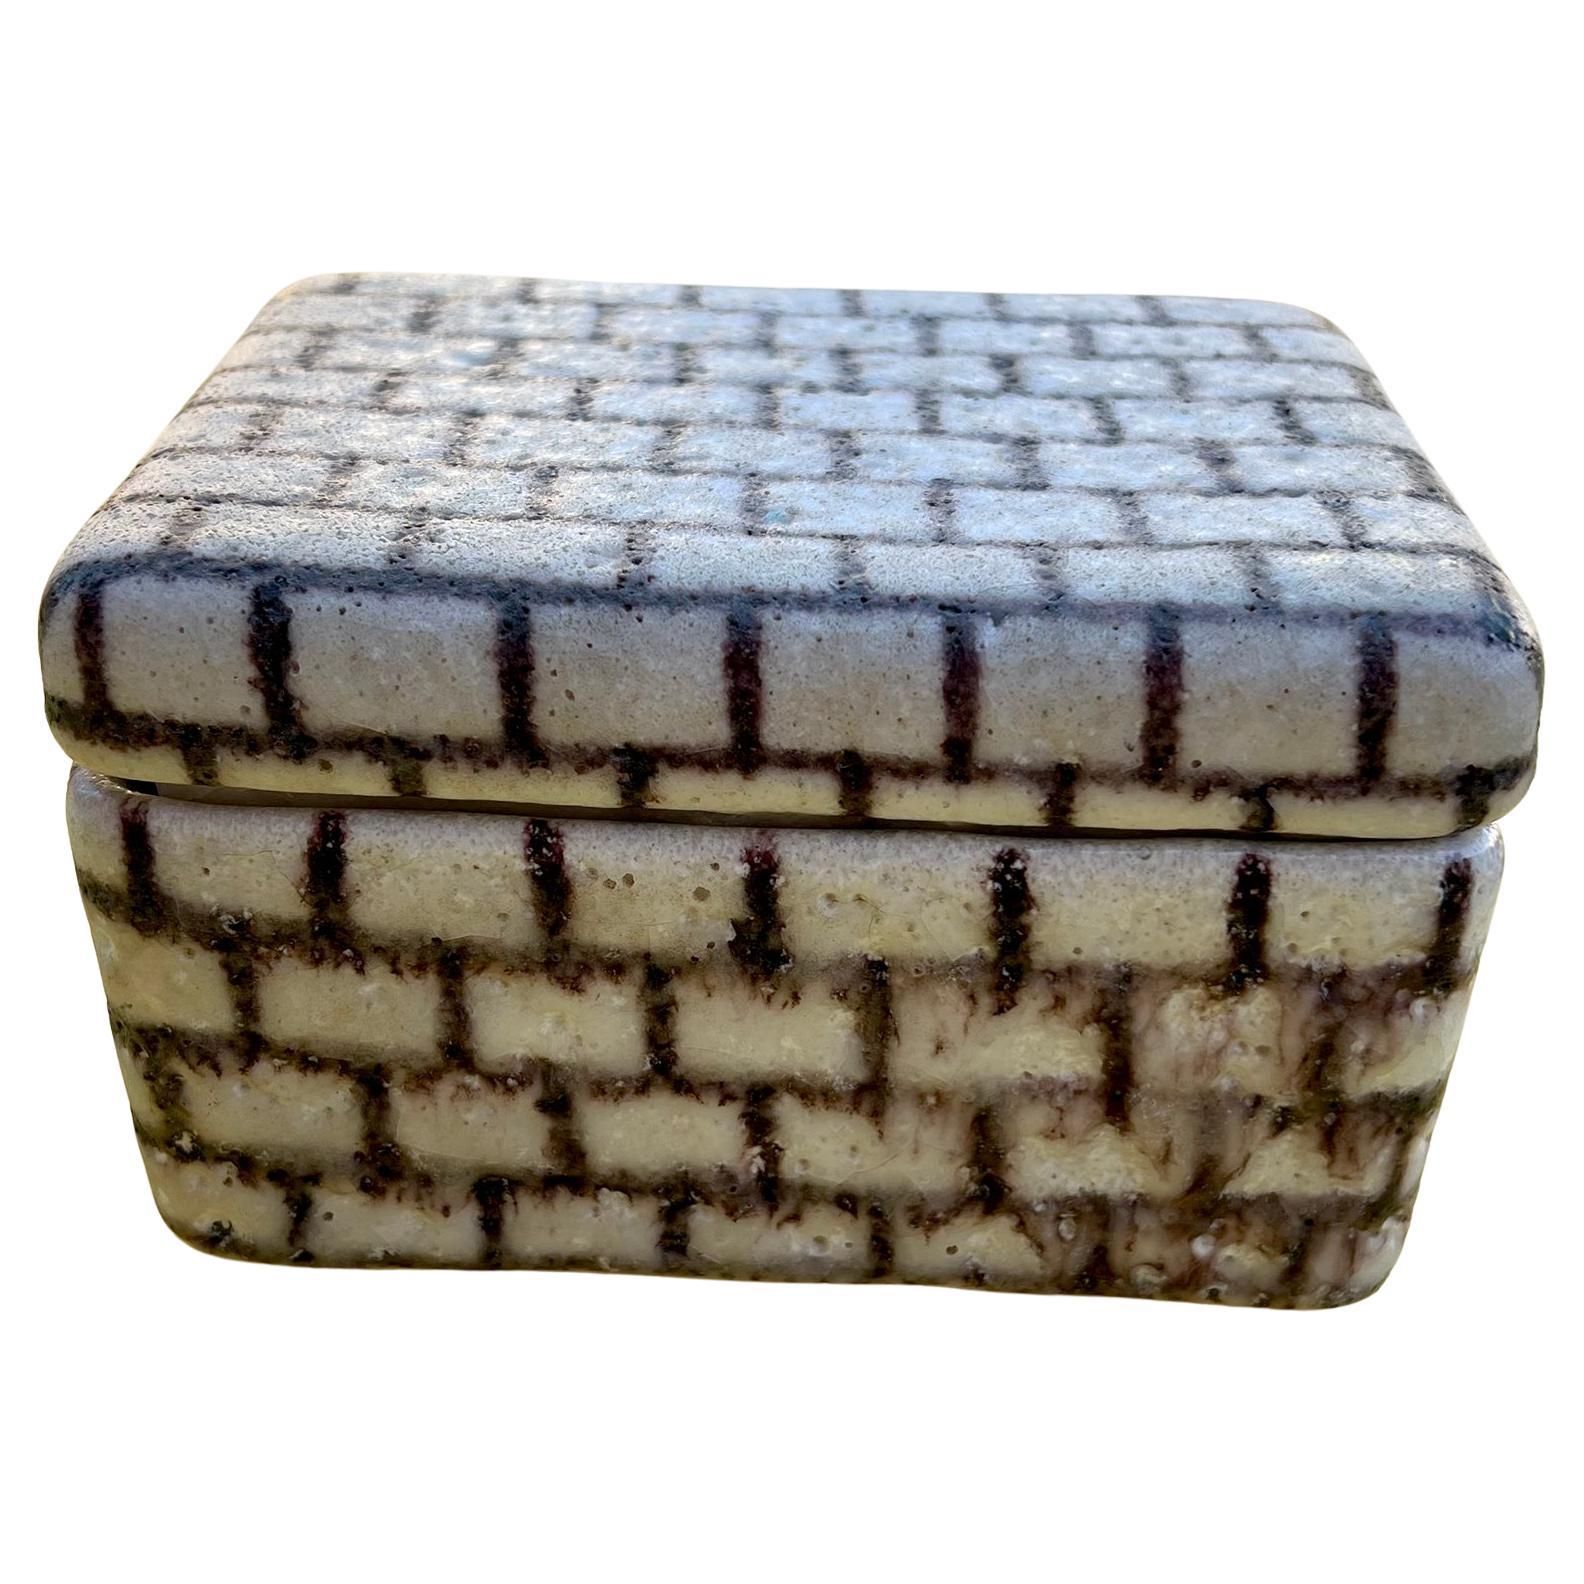 Foamy glazed lidded ceramic box with grid design created by Guido Gambone, circa 1950s.  Box measures 3.5